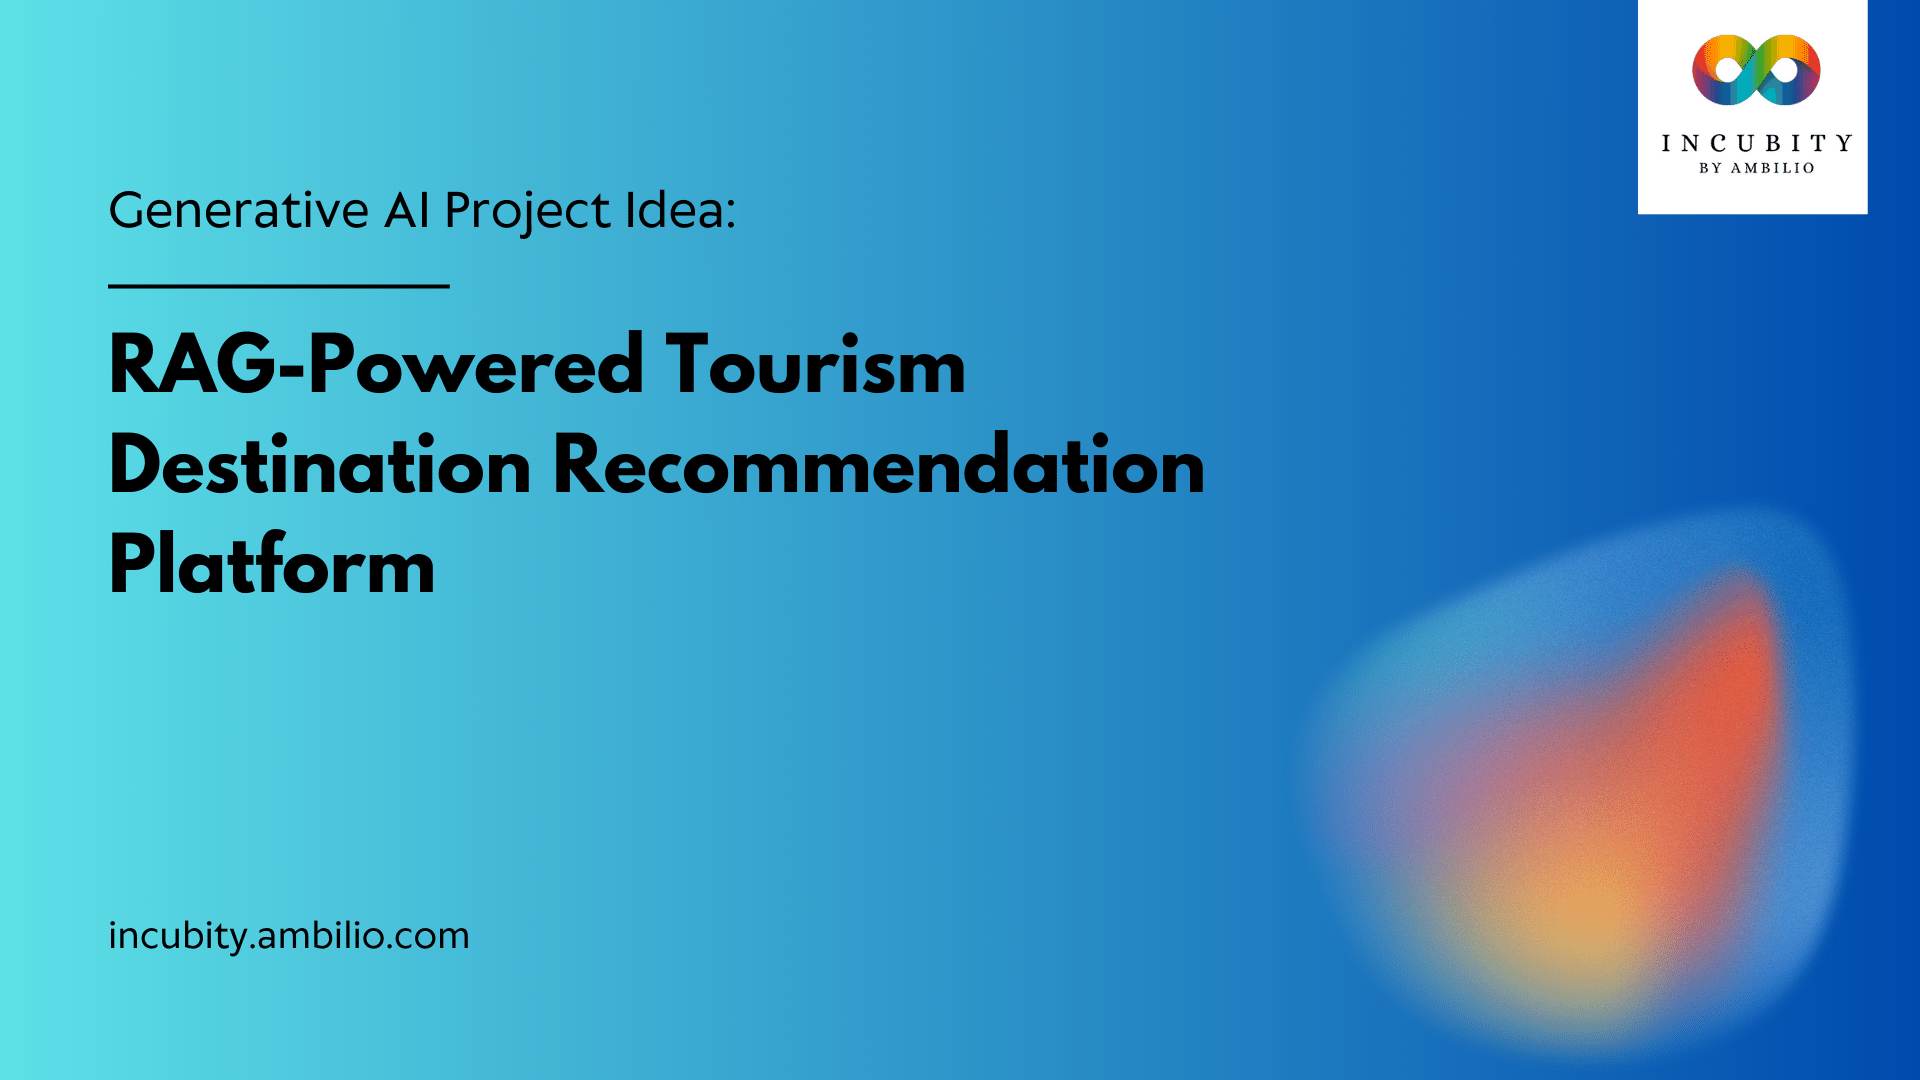 RAG-Powered Tourism Destination Recommendation Platform